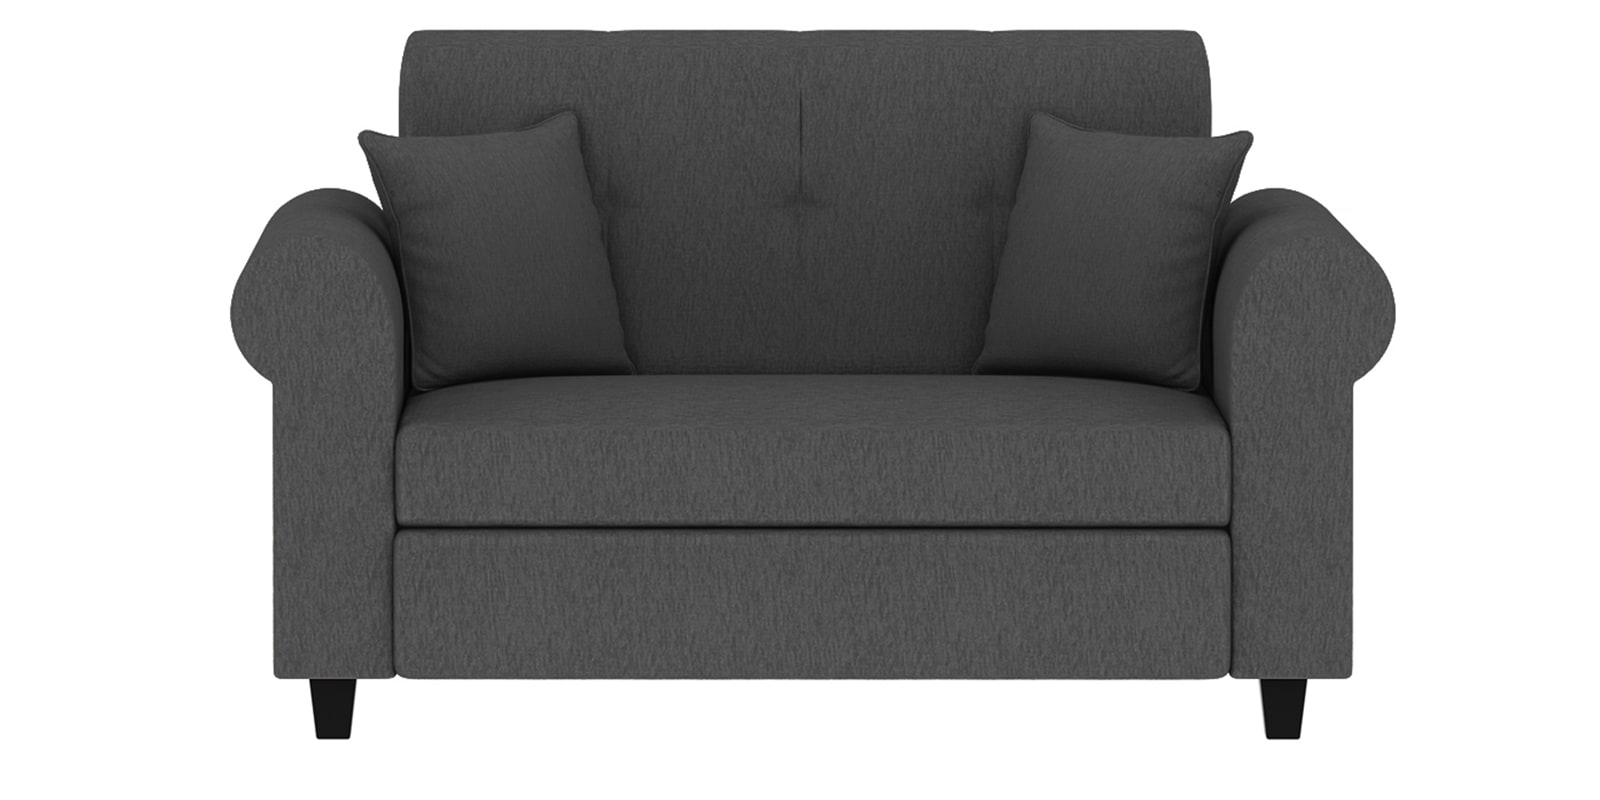 Derado Fabric 2 Seater Sofa in Charcoal Grey Colour